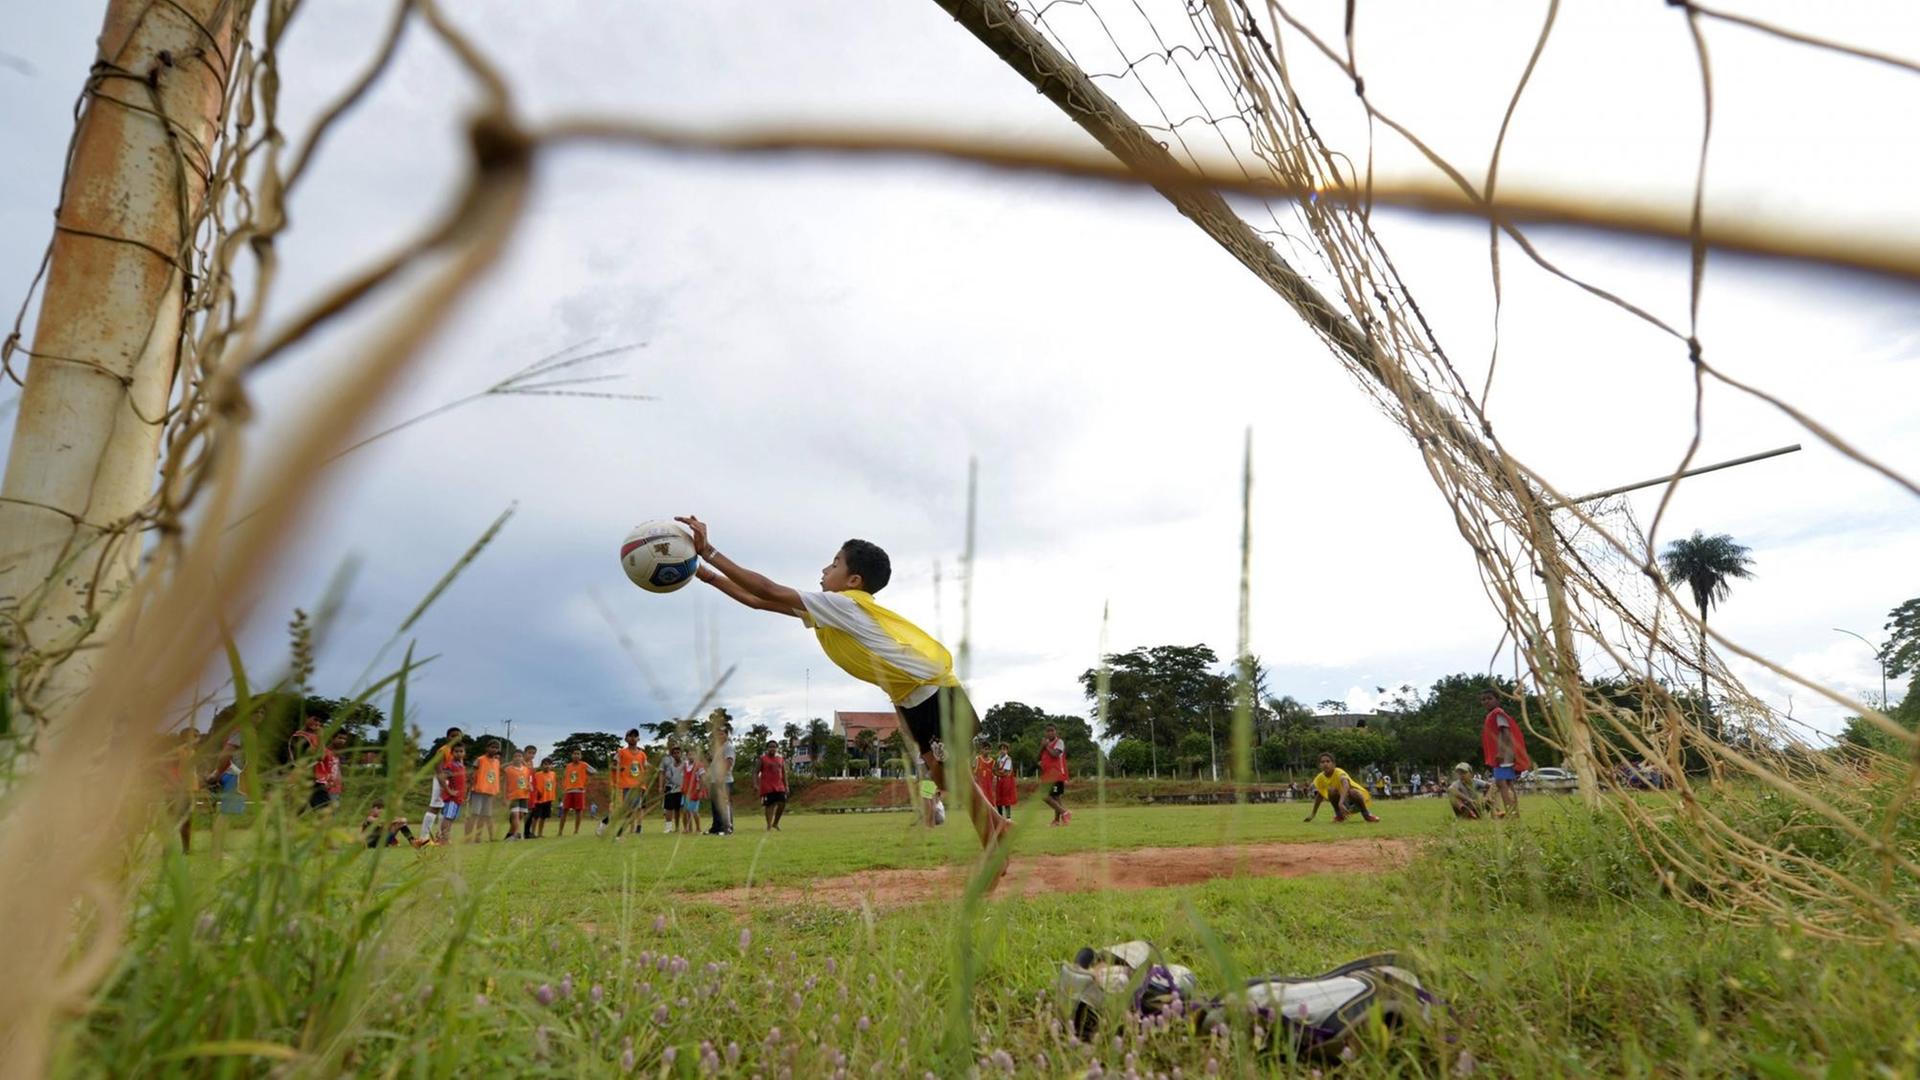 Fuballprojekt in einer Favela im brailianischen Bundesstaat Mato Grosso